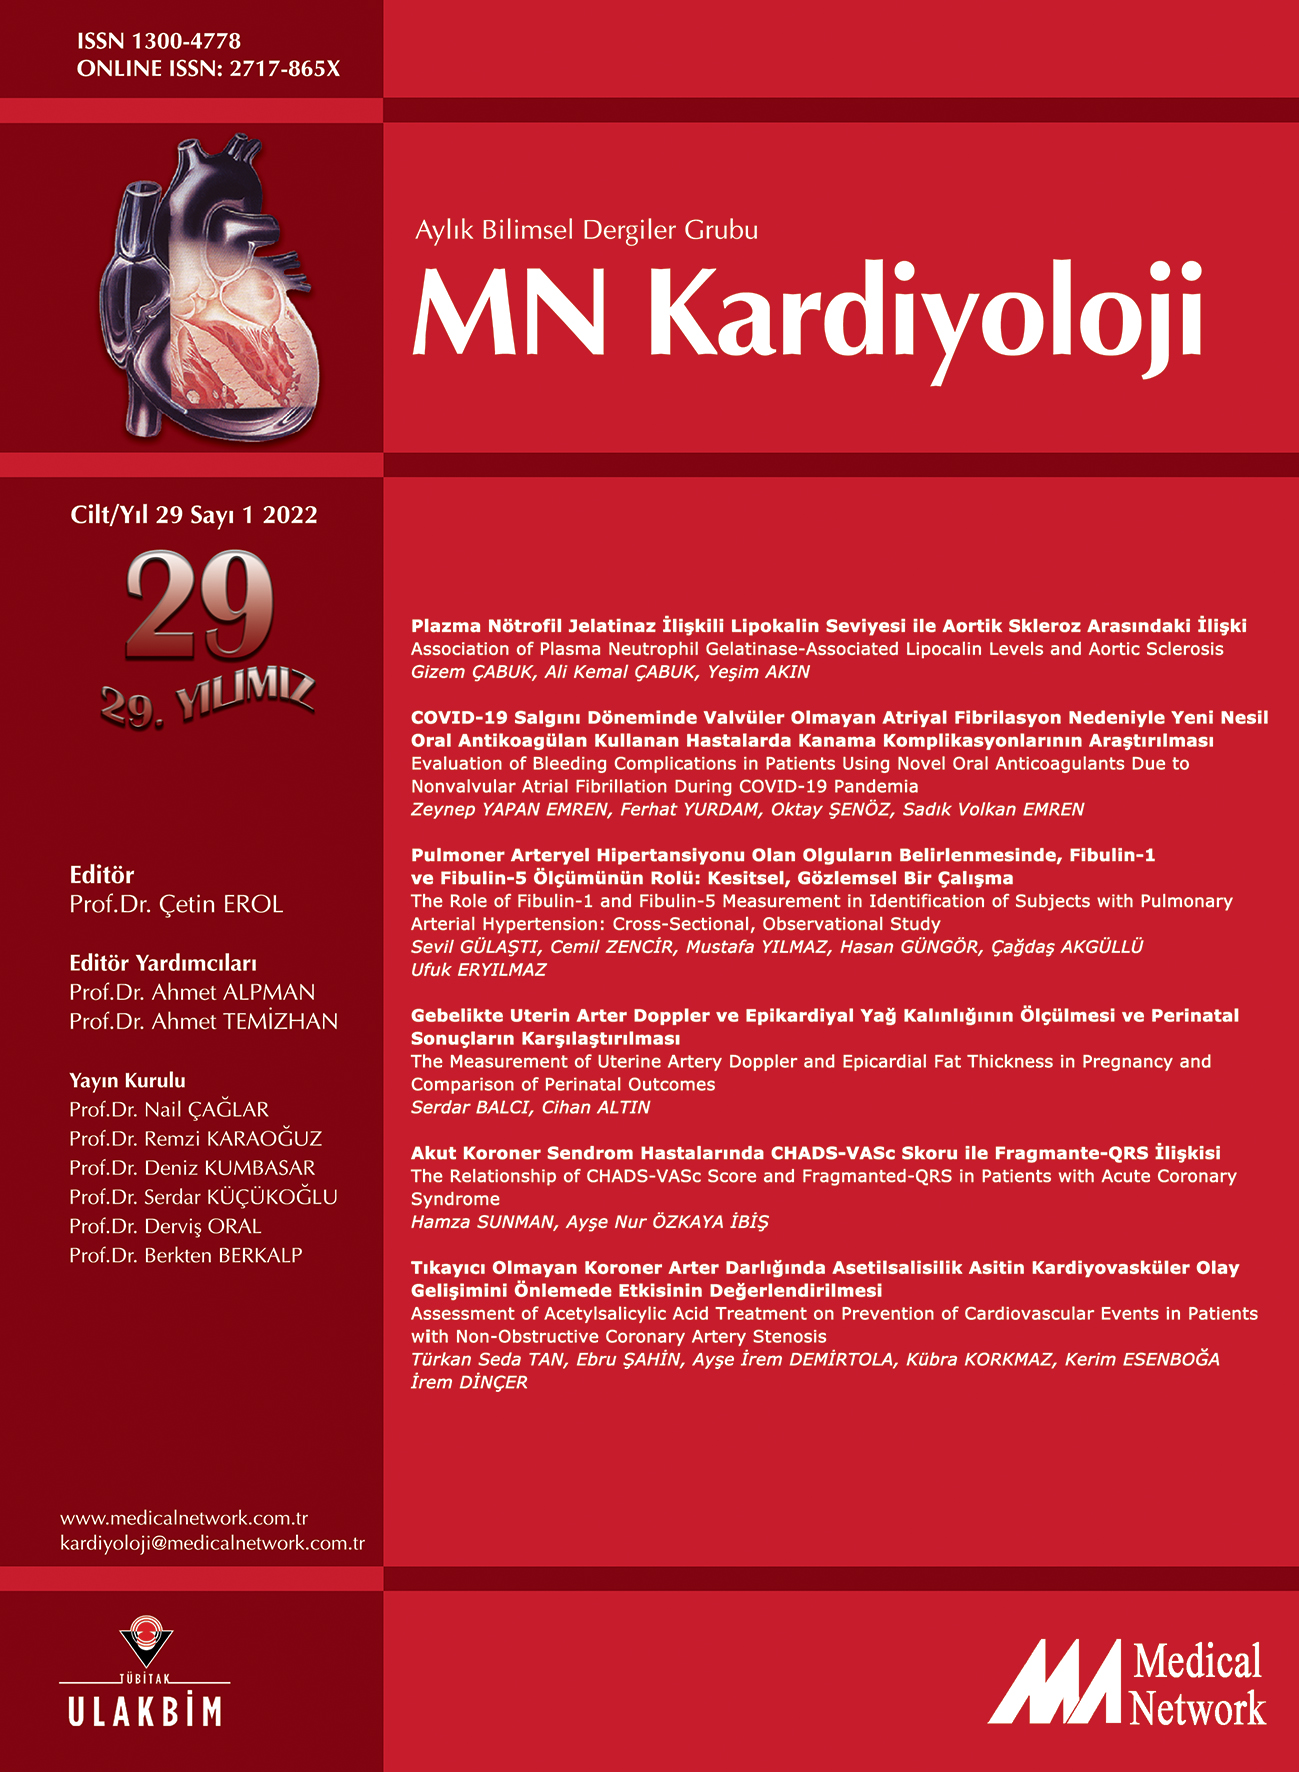 <p>MN Kardiyoloji Cilt: 29 Sayı: 1 2022 MN Cardiology Volume: 29 No: 1 2022</p>